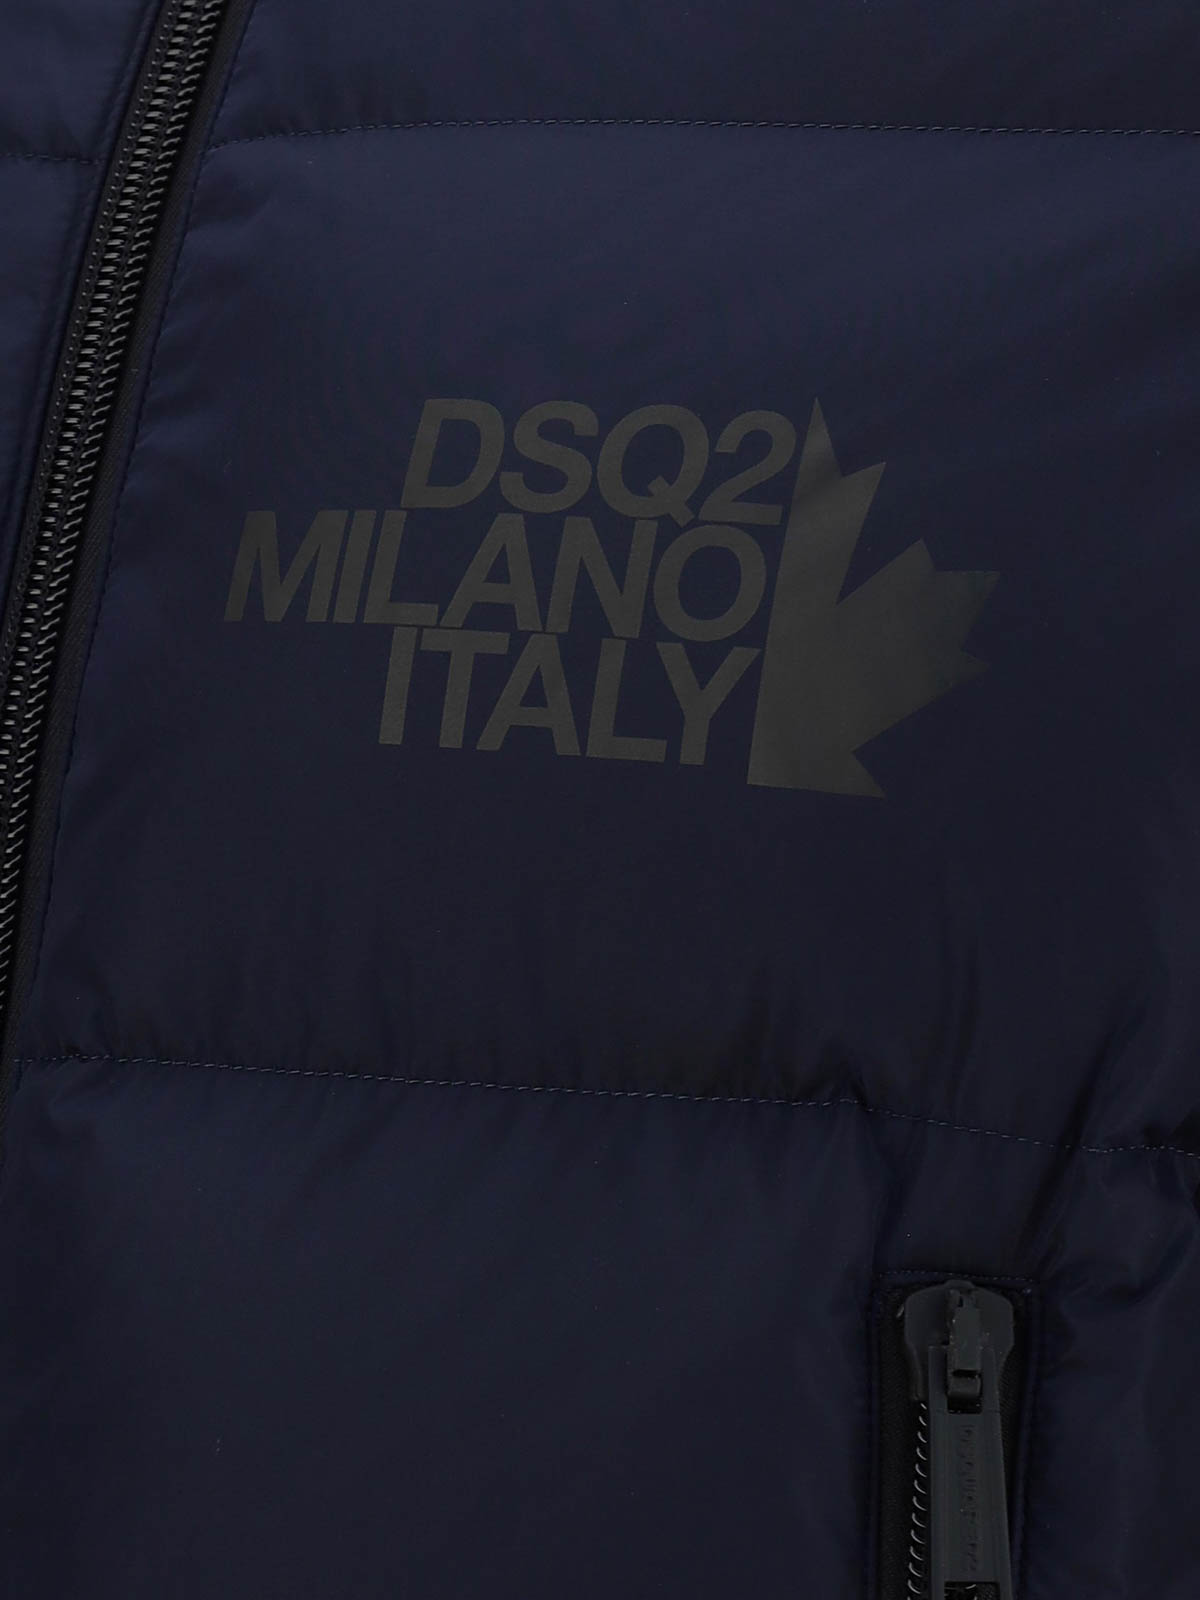 Padded jackets Dsquared2 - DSQ2 Milano Italy puffer bomber jacket ...